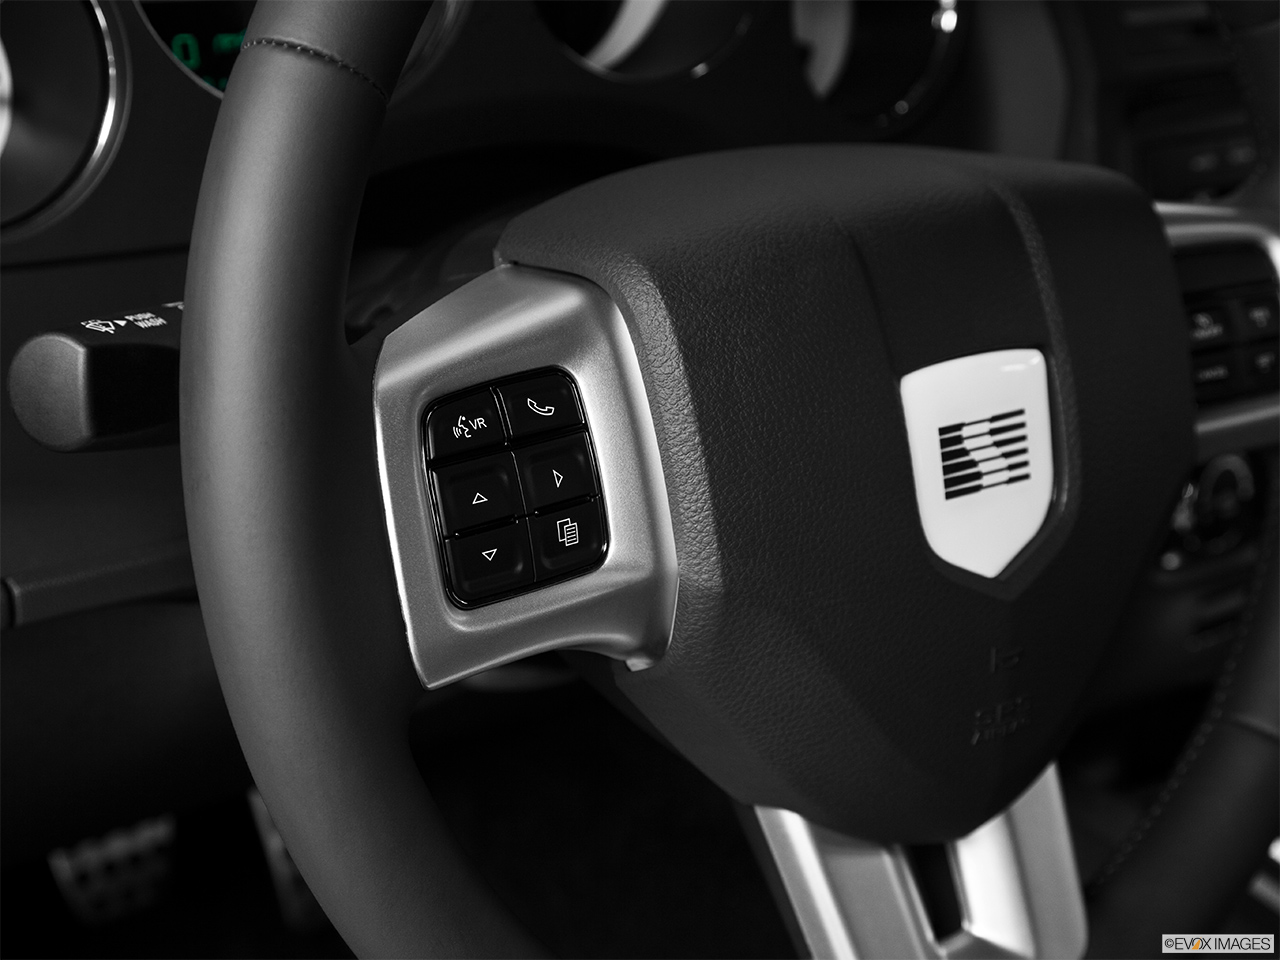 2014 Saleen 570 Challenger Label 570 Black Label Steering Wheel Controls (Left Side) 